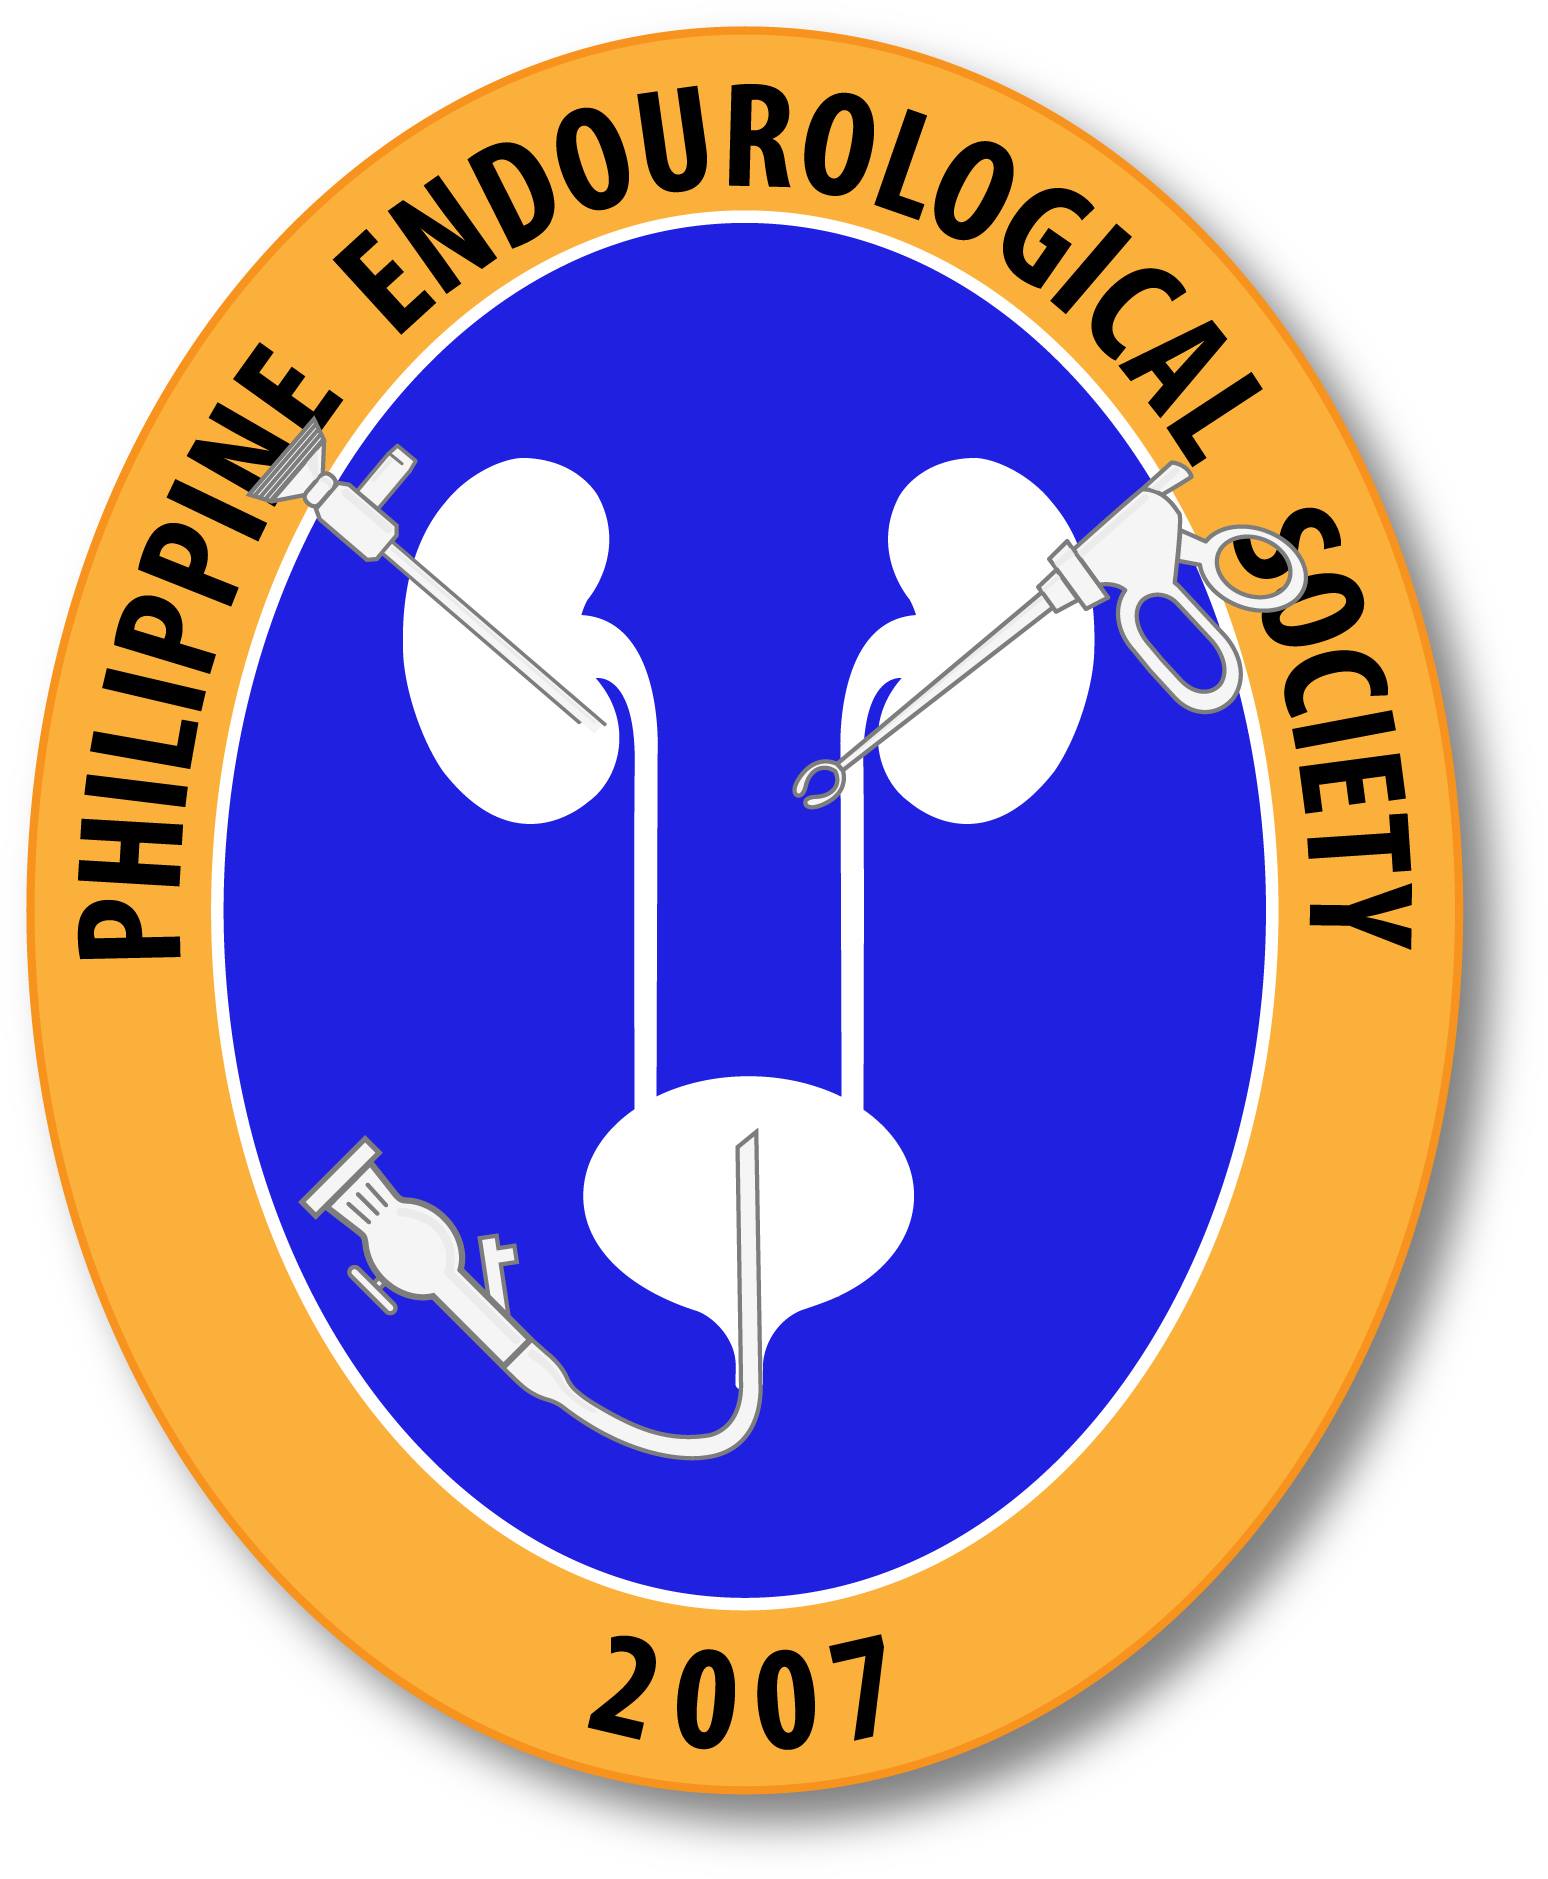 Philippine Endourological Society